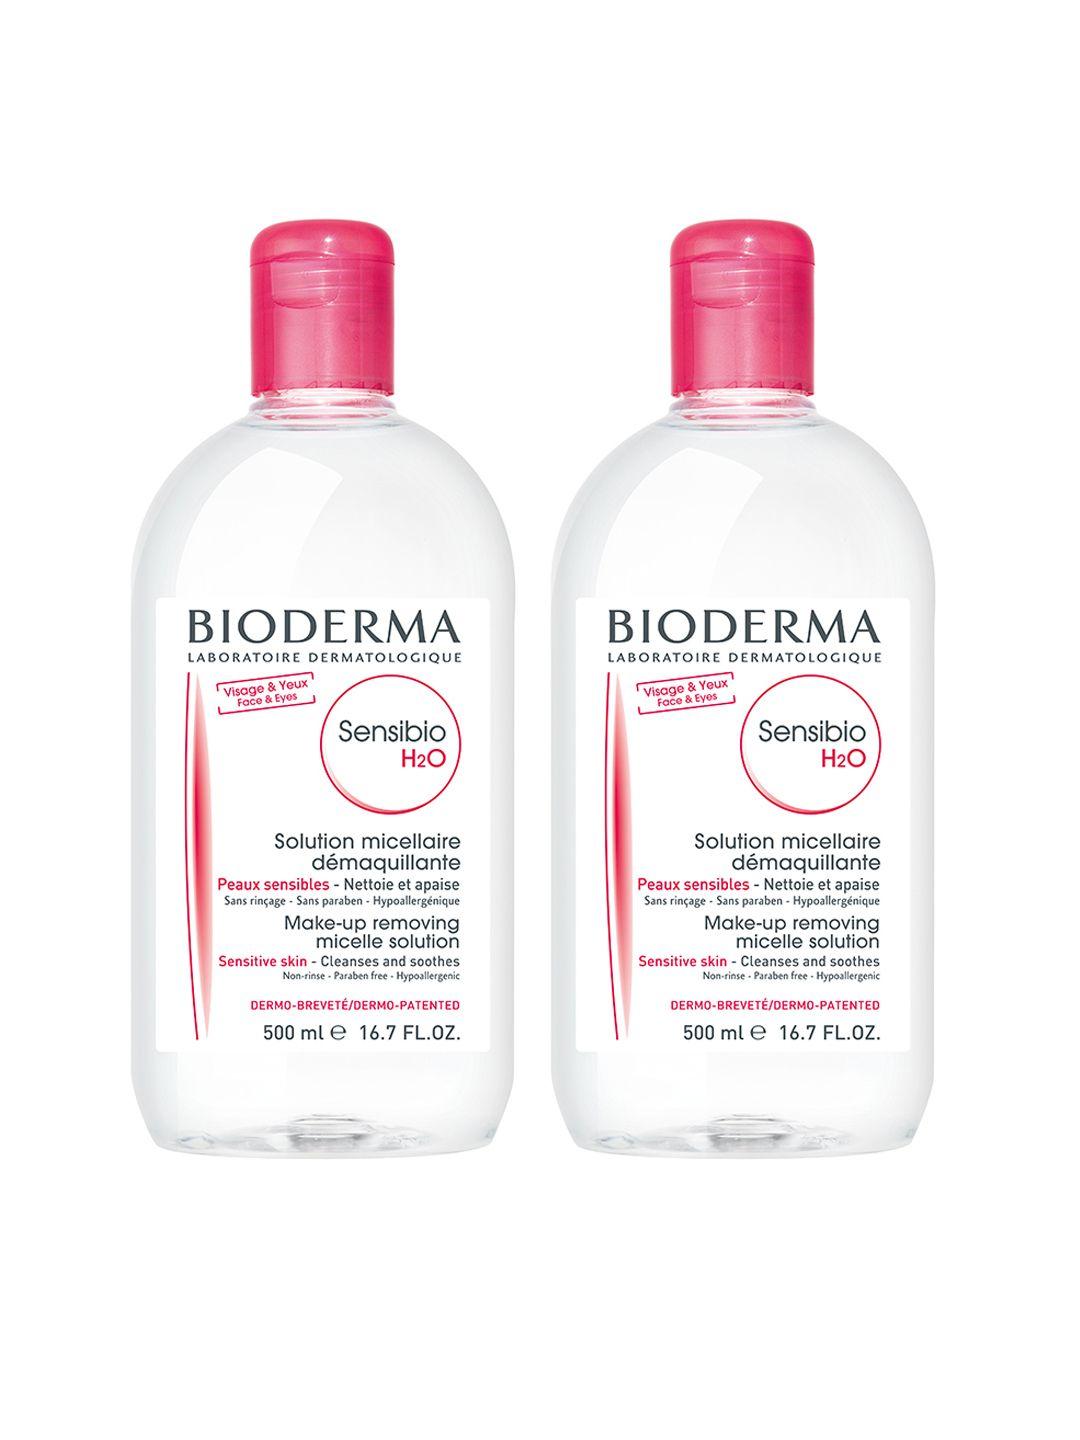 bioderma set of 2 sensibio h2o makeup remover & cleanser - 500 ml each